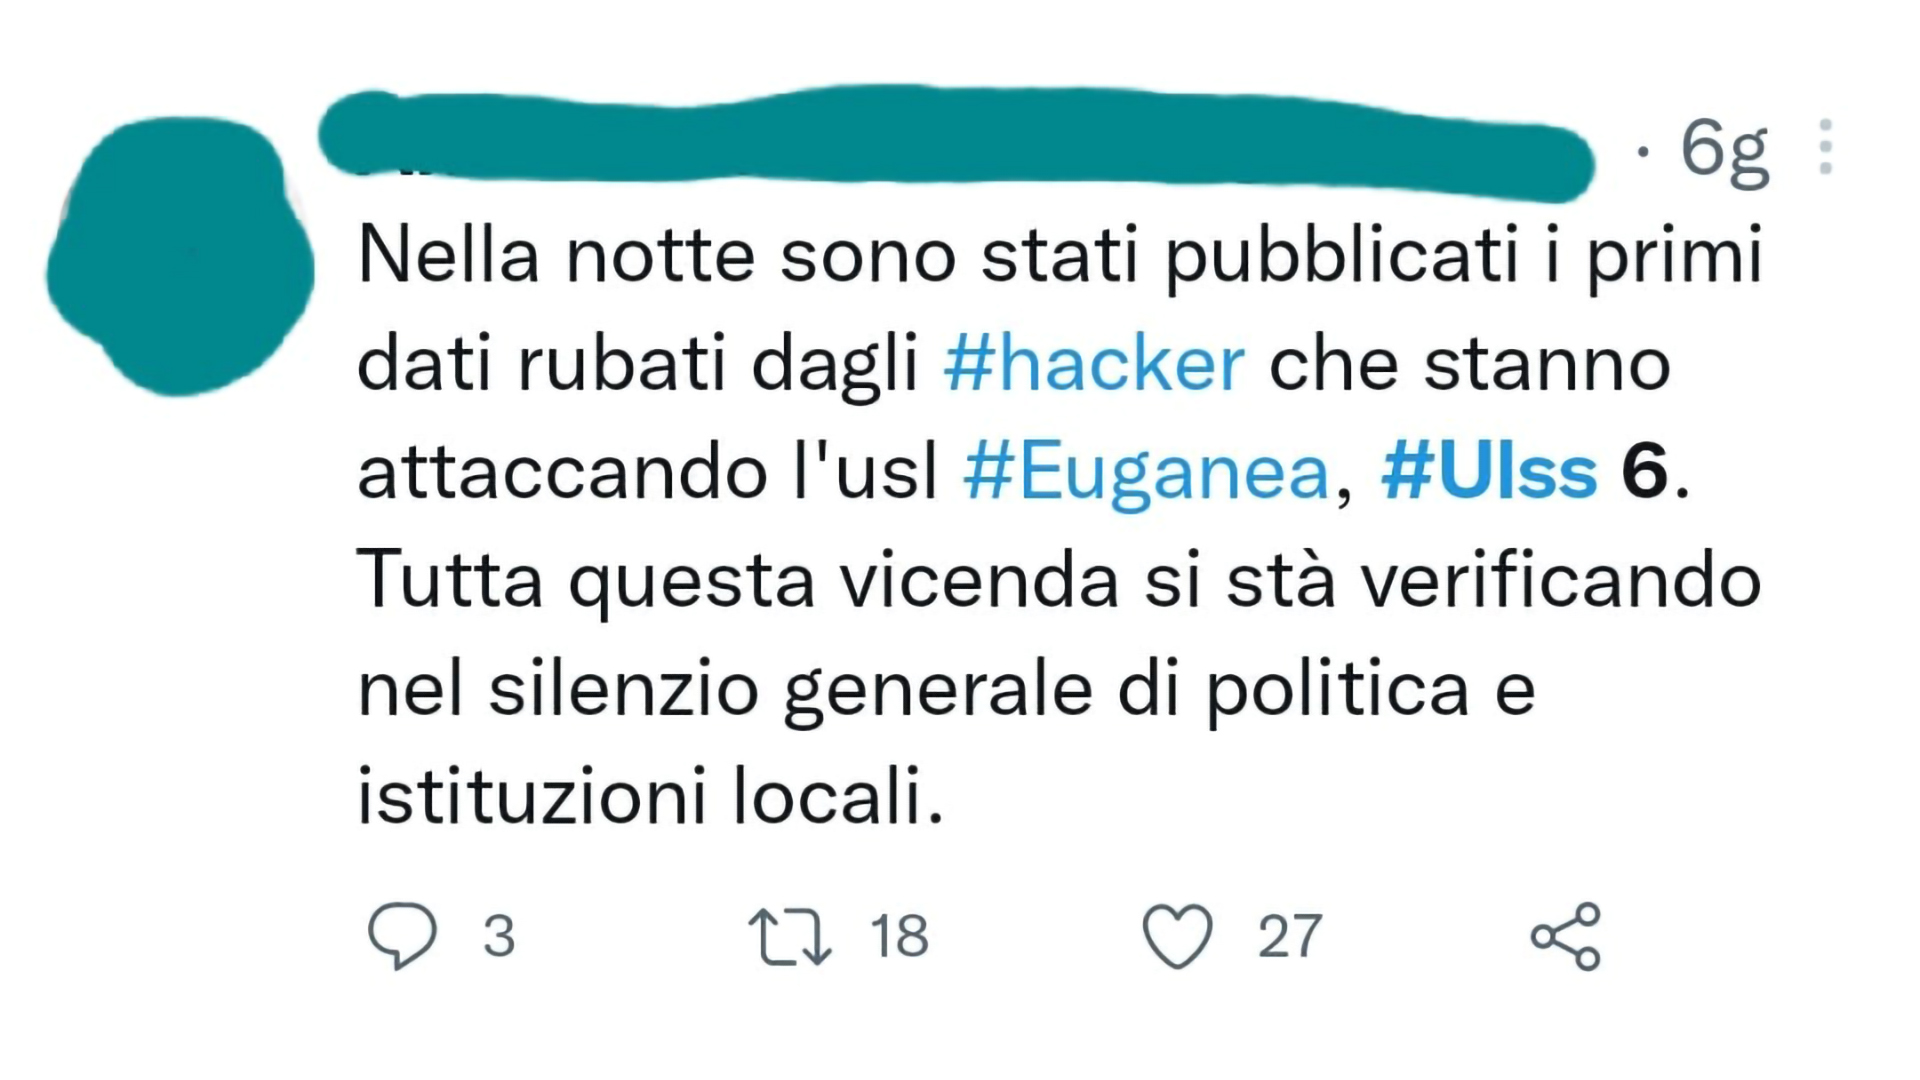 Attacco hacker, tweet 1